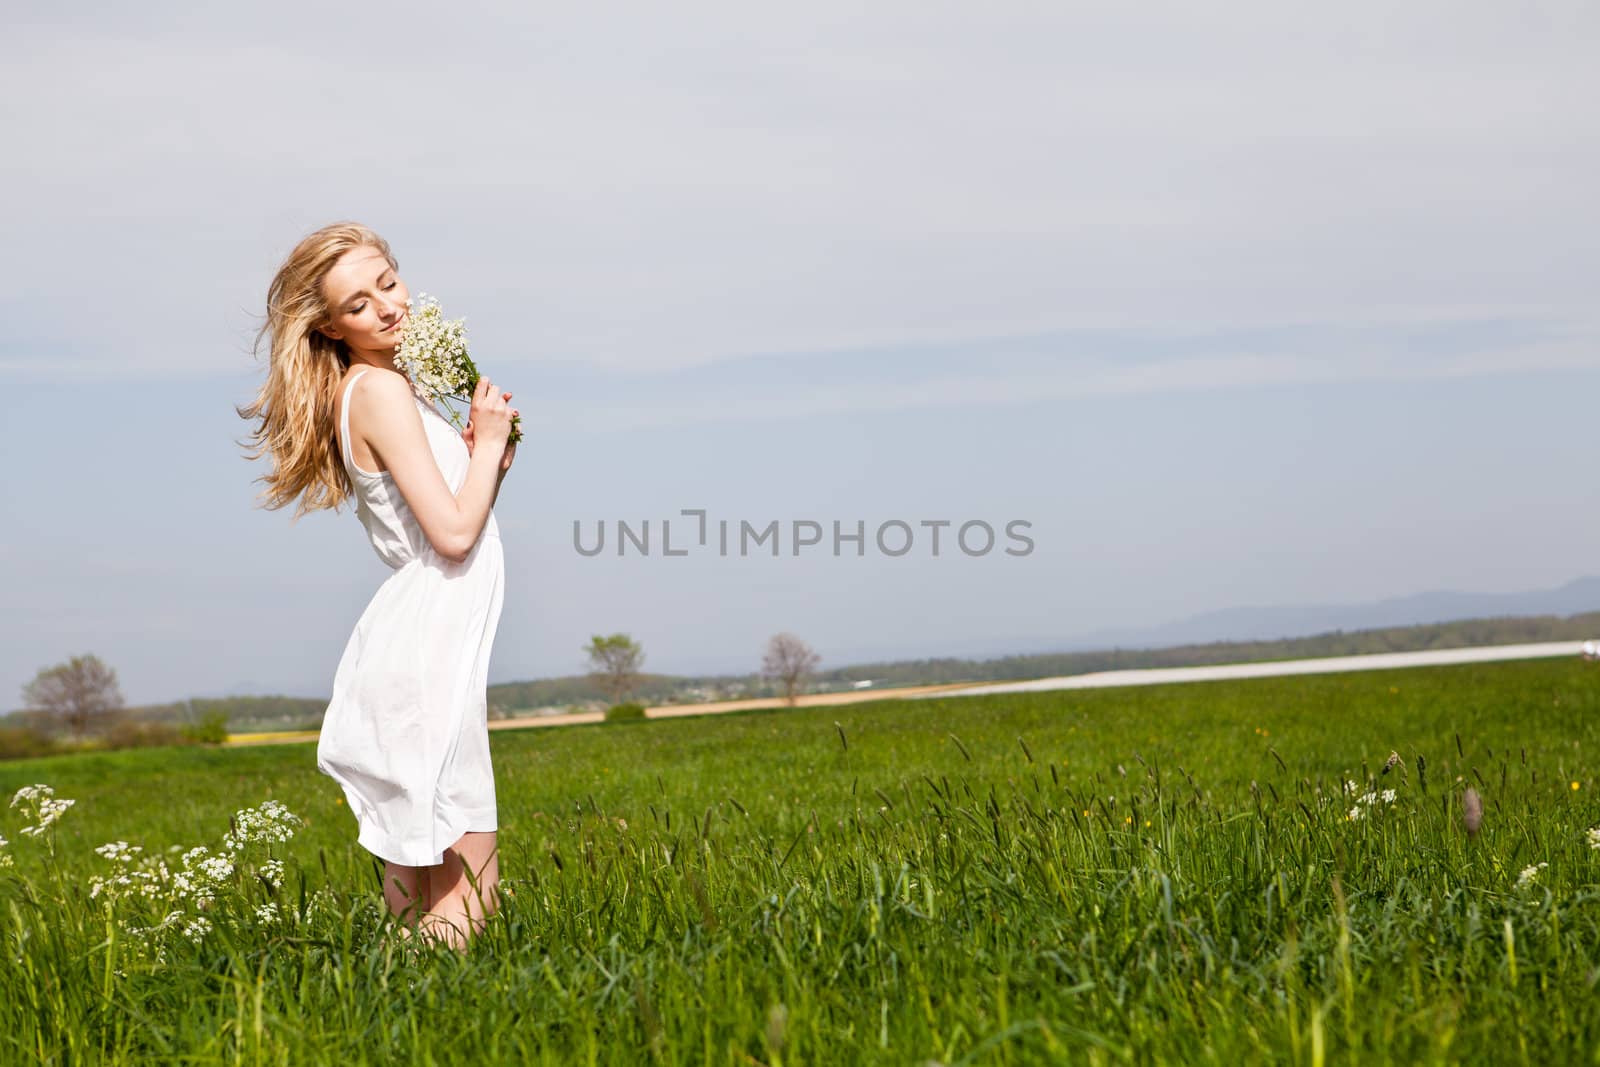 beautiful blonde woman outdoor in summer happy by juniart